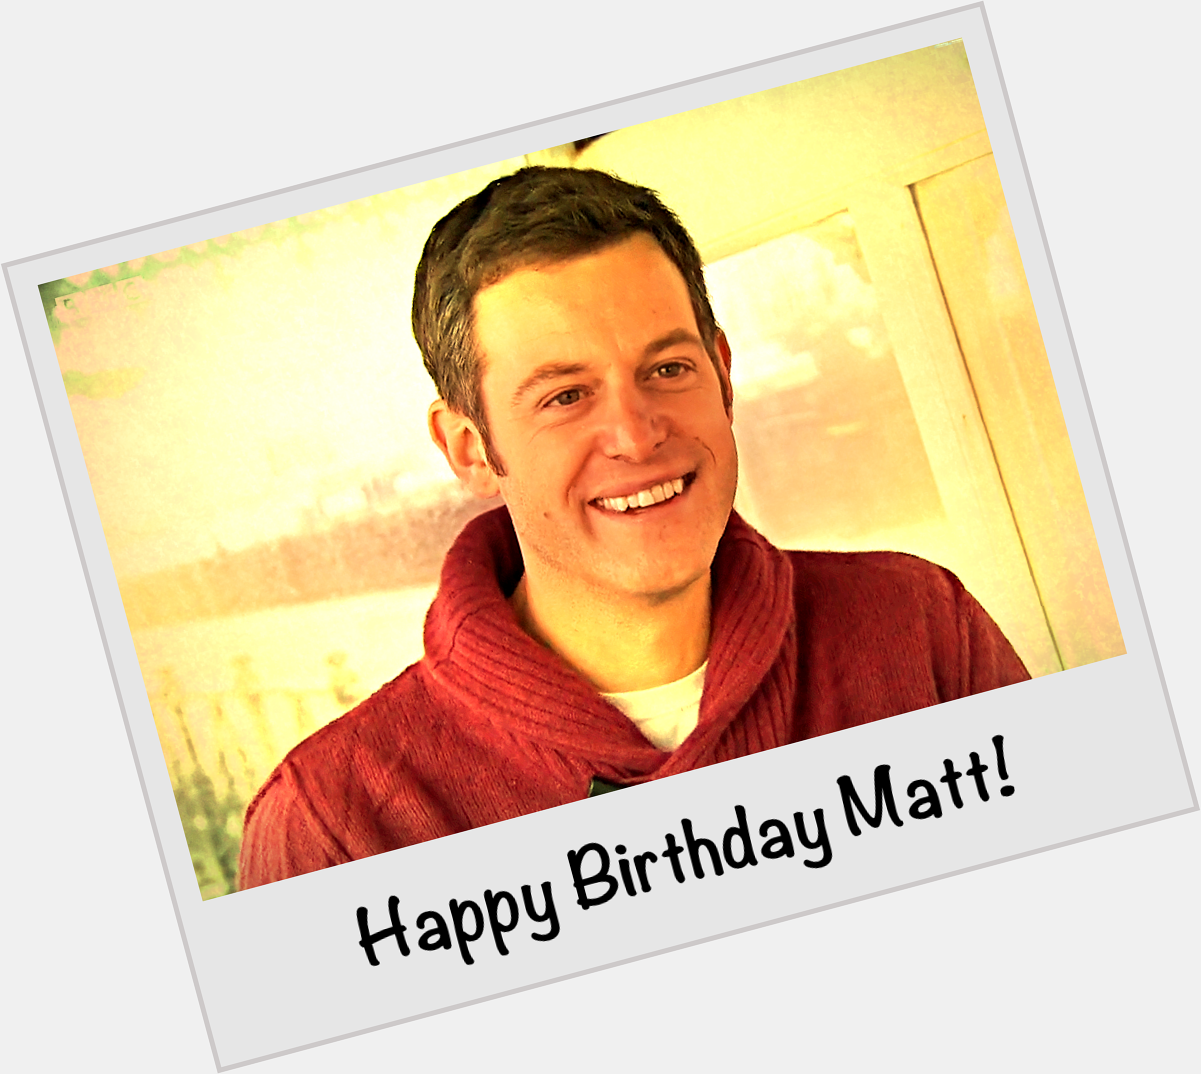 Happy Birthday to Matt Baker who is 37 today! 